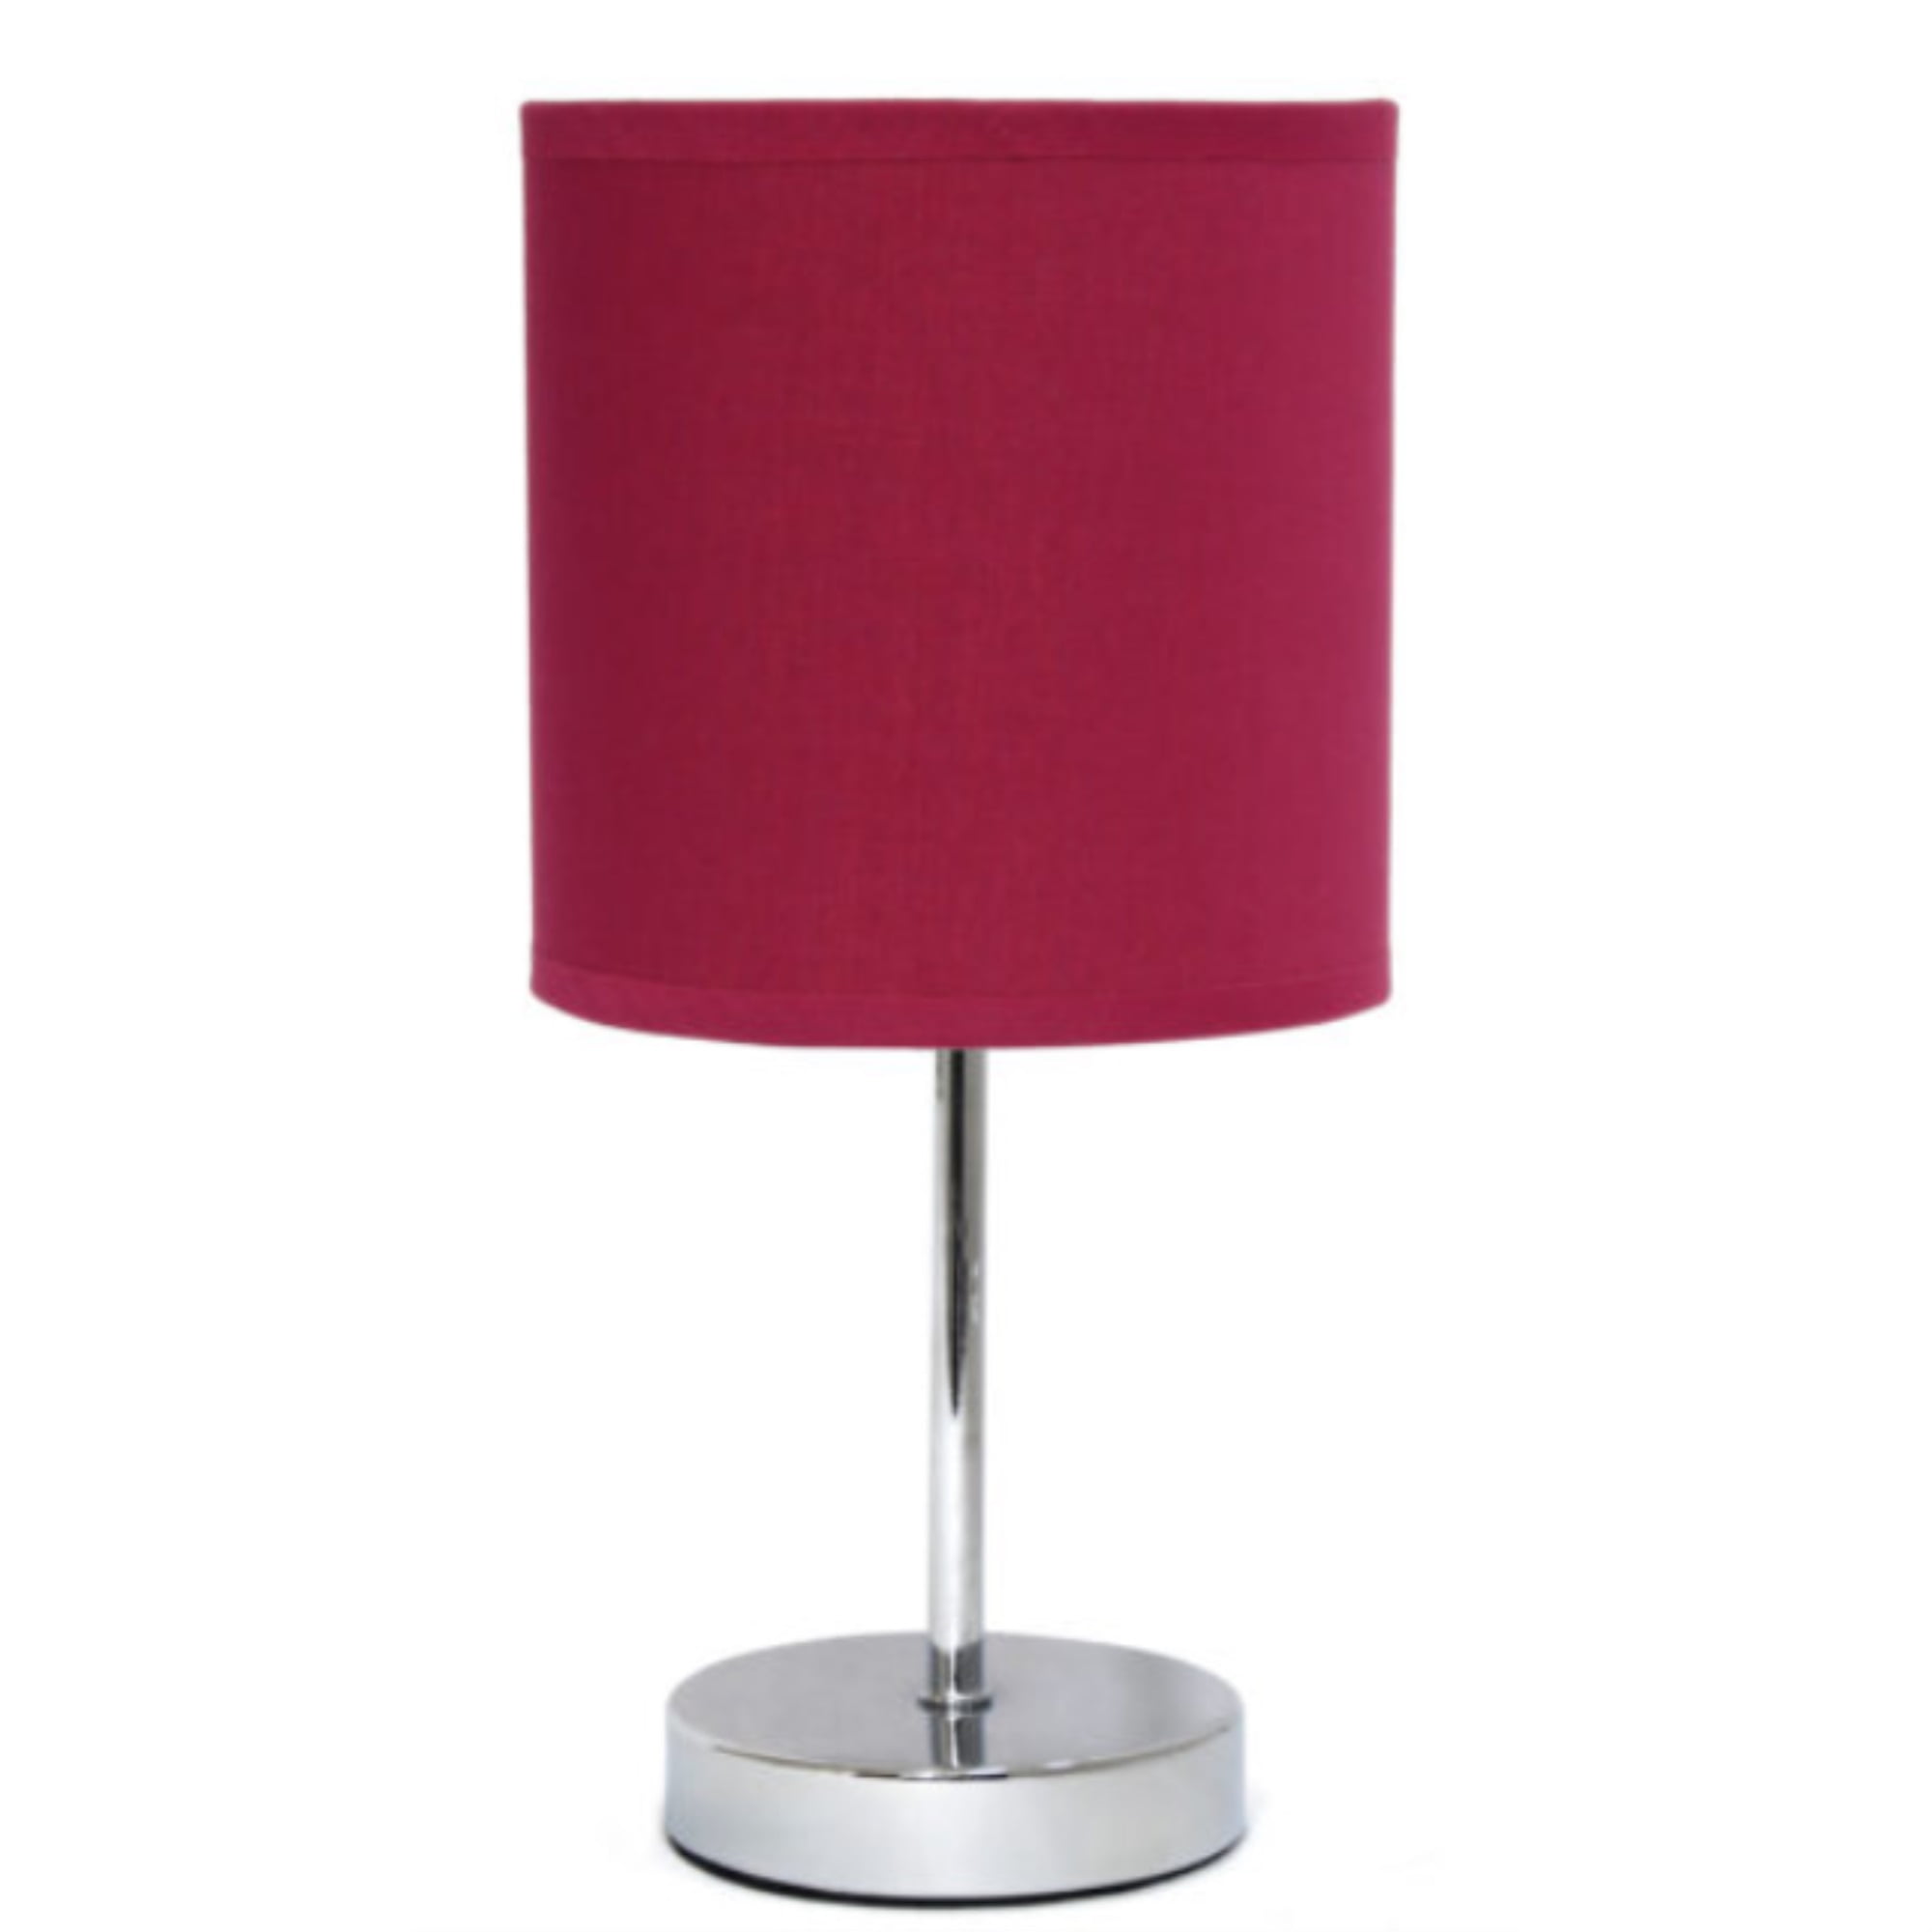 Lt2007-wne Chrome Mini Basic Table Lamp With Fabric Shade, Wine